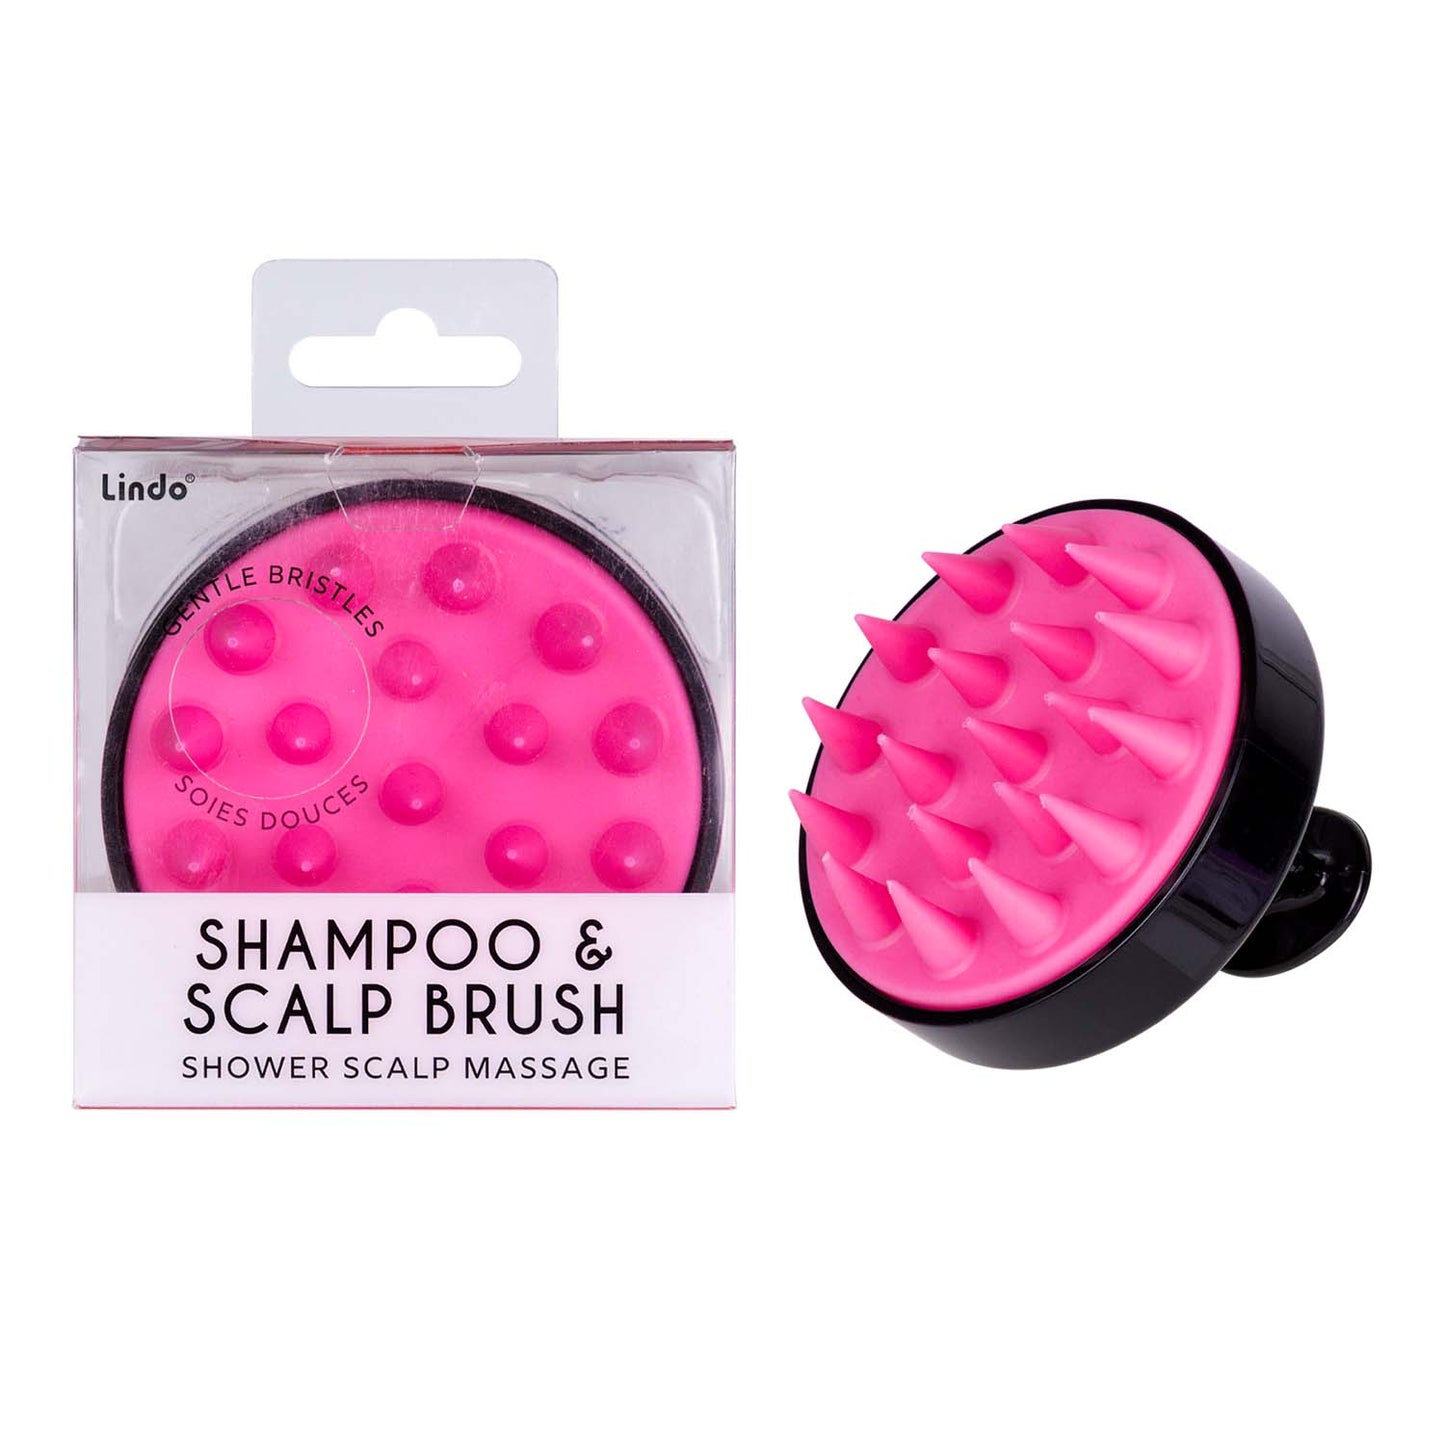 Lindo Shampoo & Scalp Brush - Shower Scalp Massage